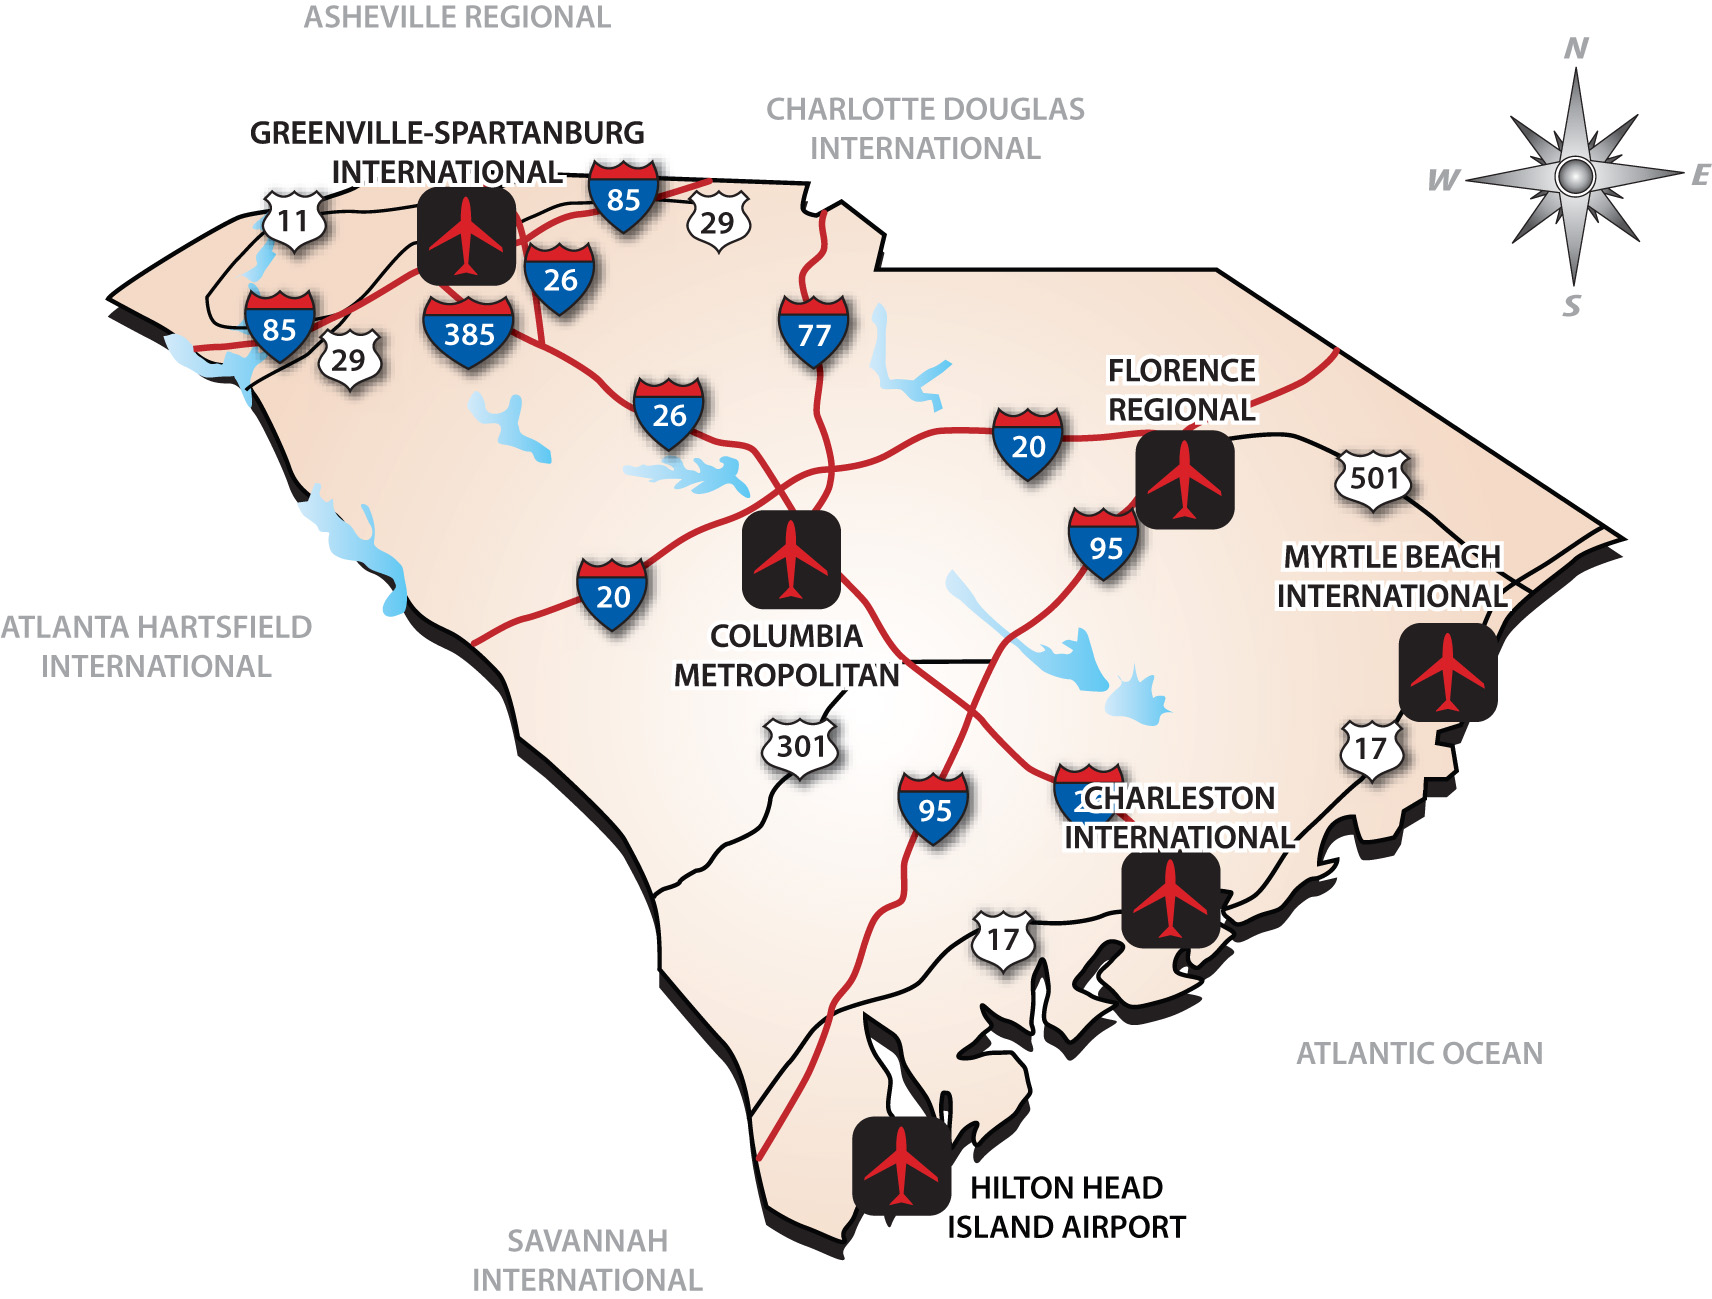 South Carolina interstates and airports